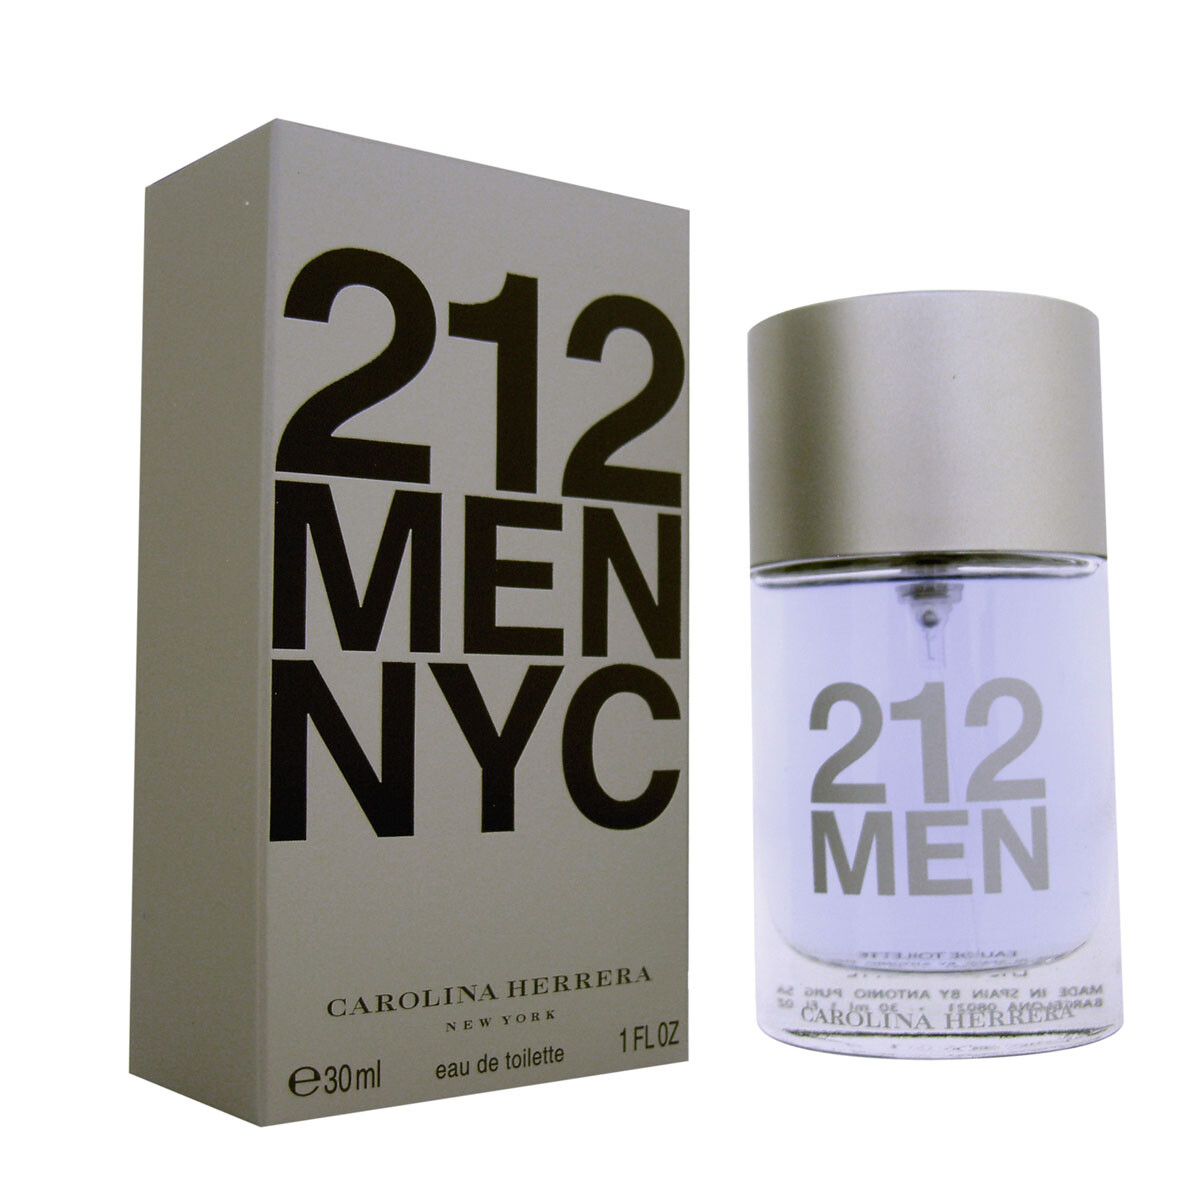 Perfume 212 Men NYC by Carolina Herrera EDT 30ml 